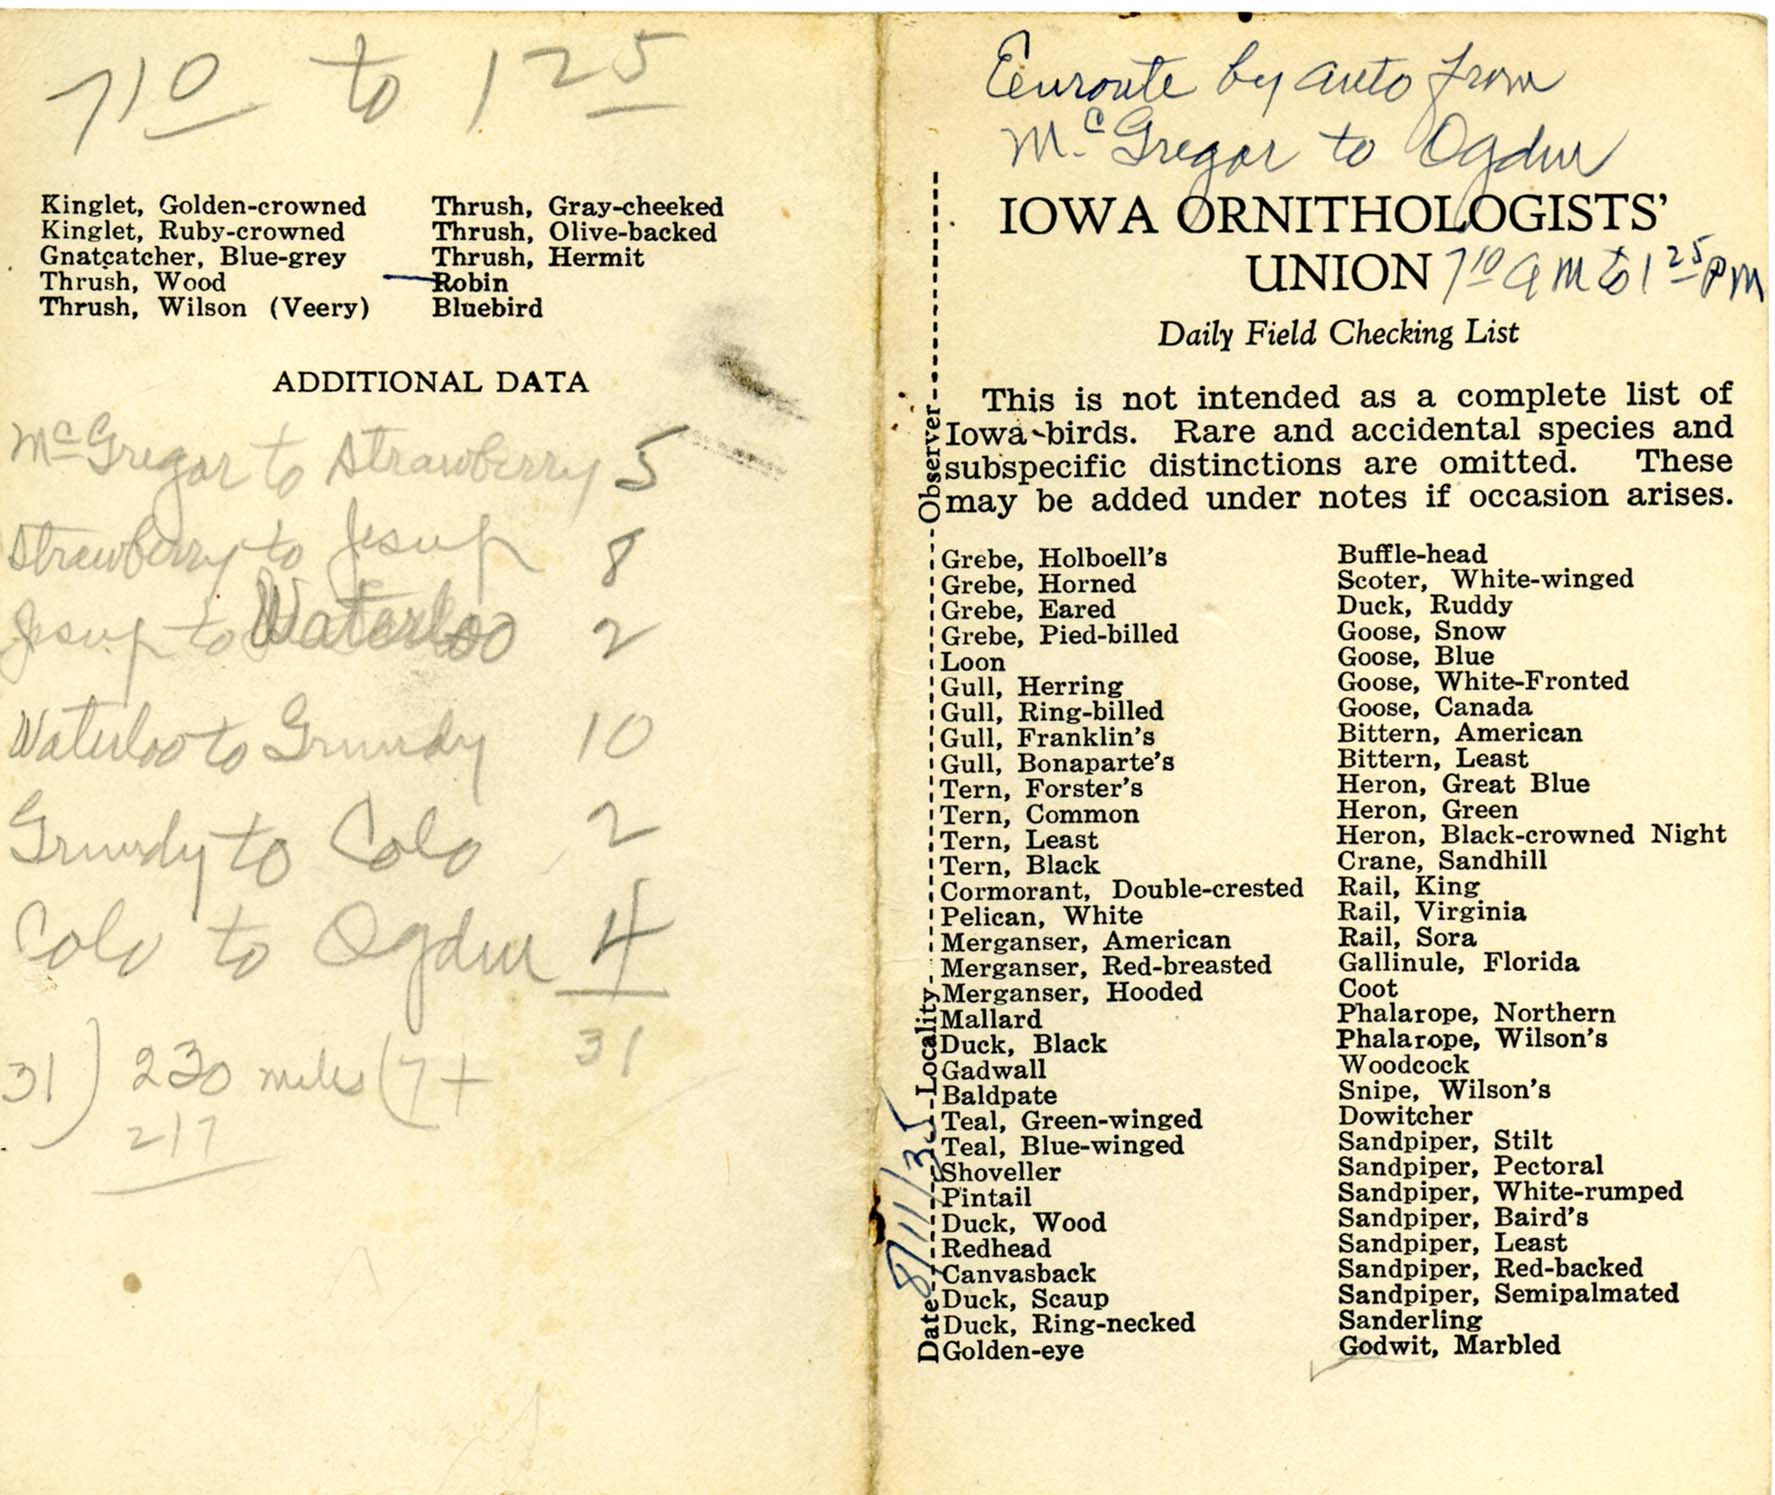 Daily field checking list, Walter Rosene, August 11, 1935